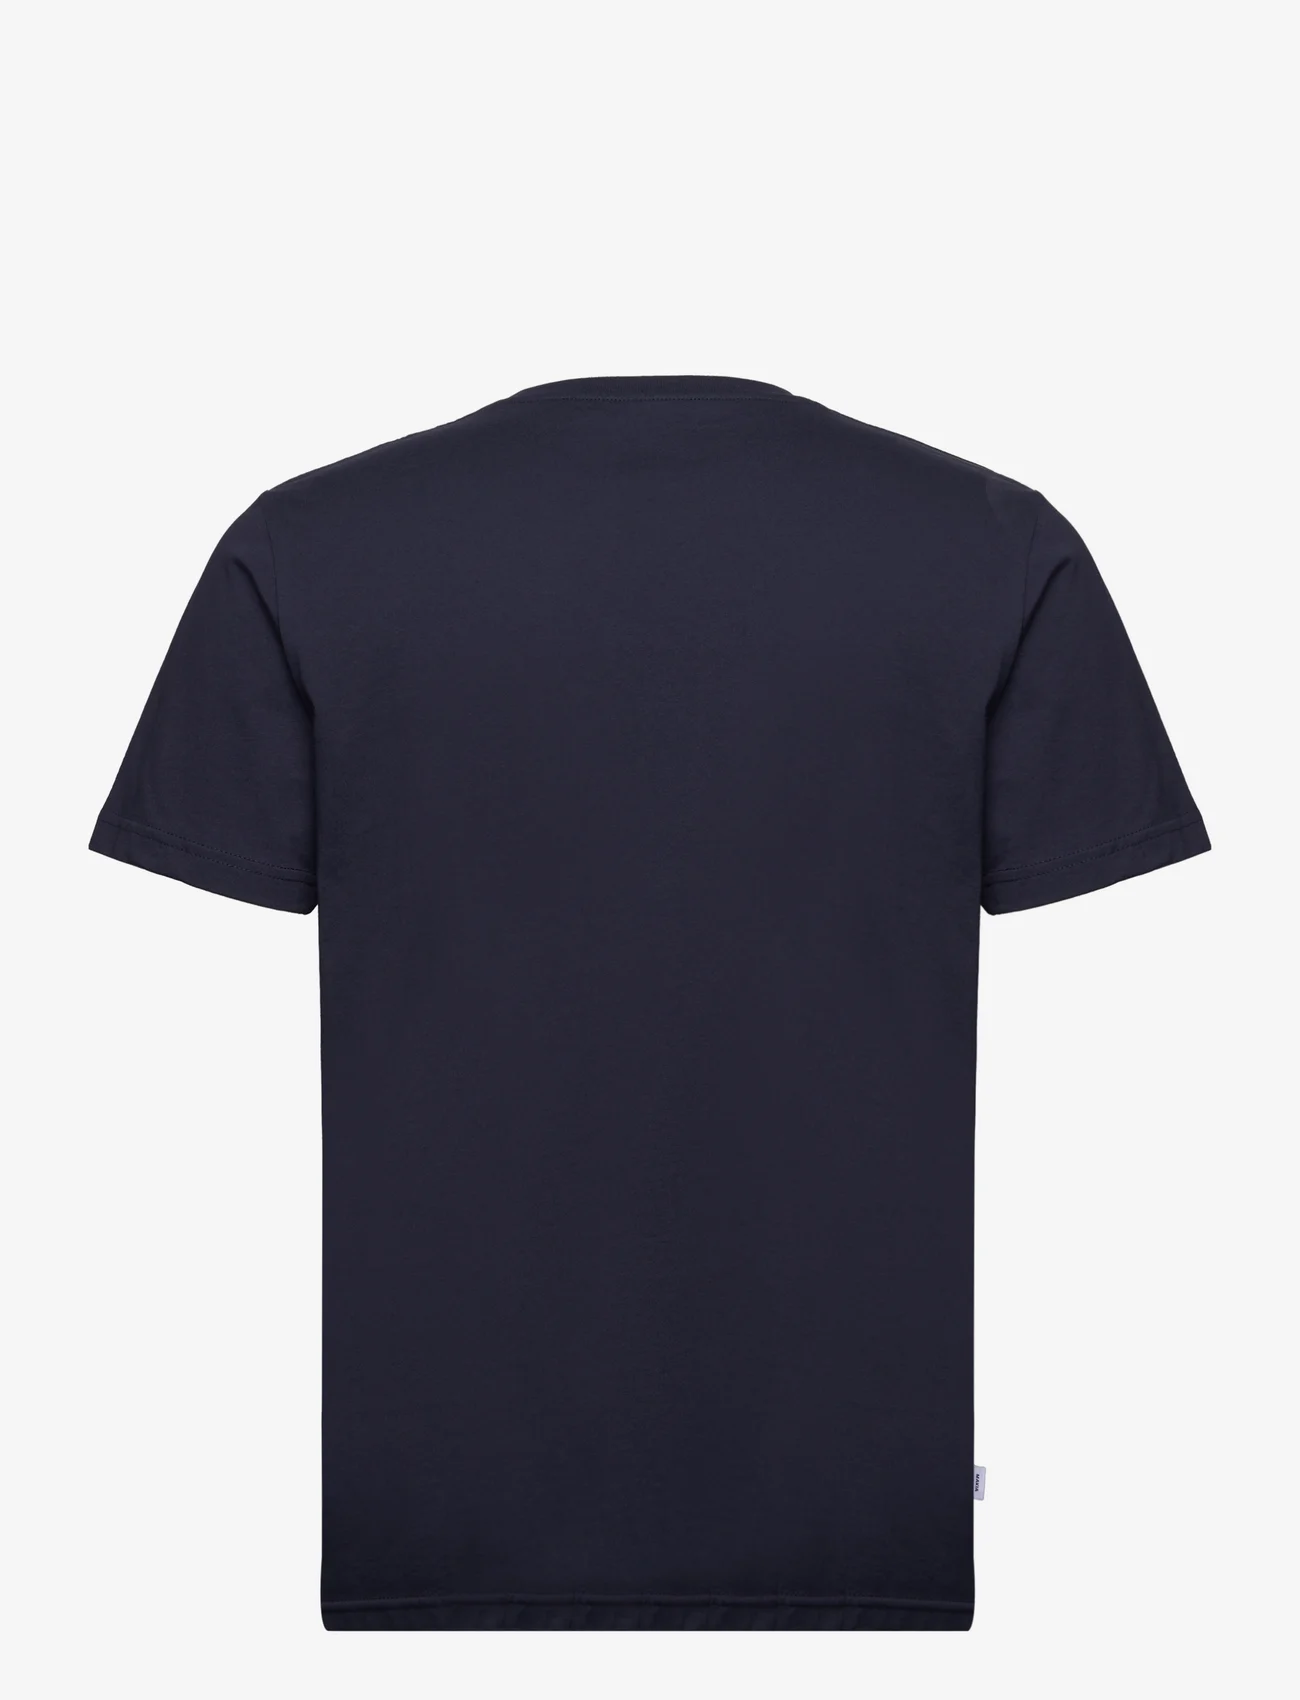 Makia - Mate T-shirt - kortärmade t-shirts - dark navy - 1